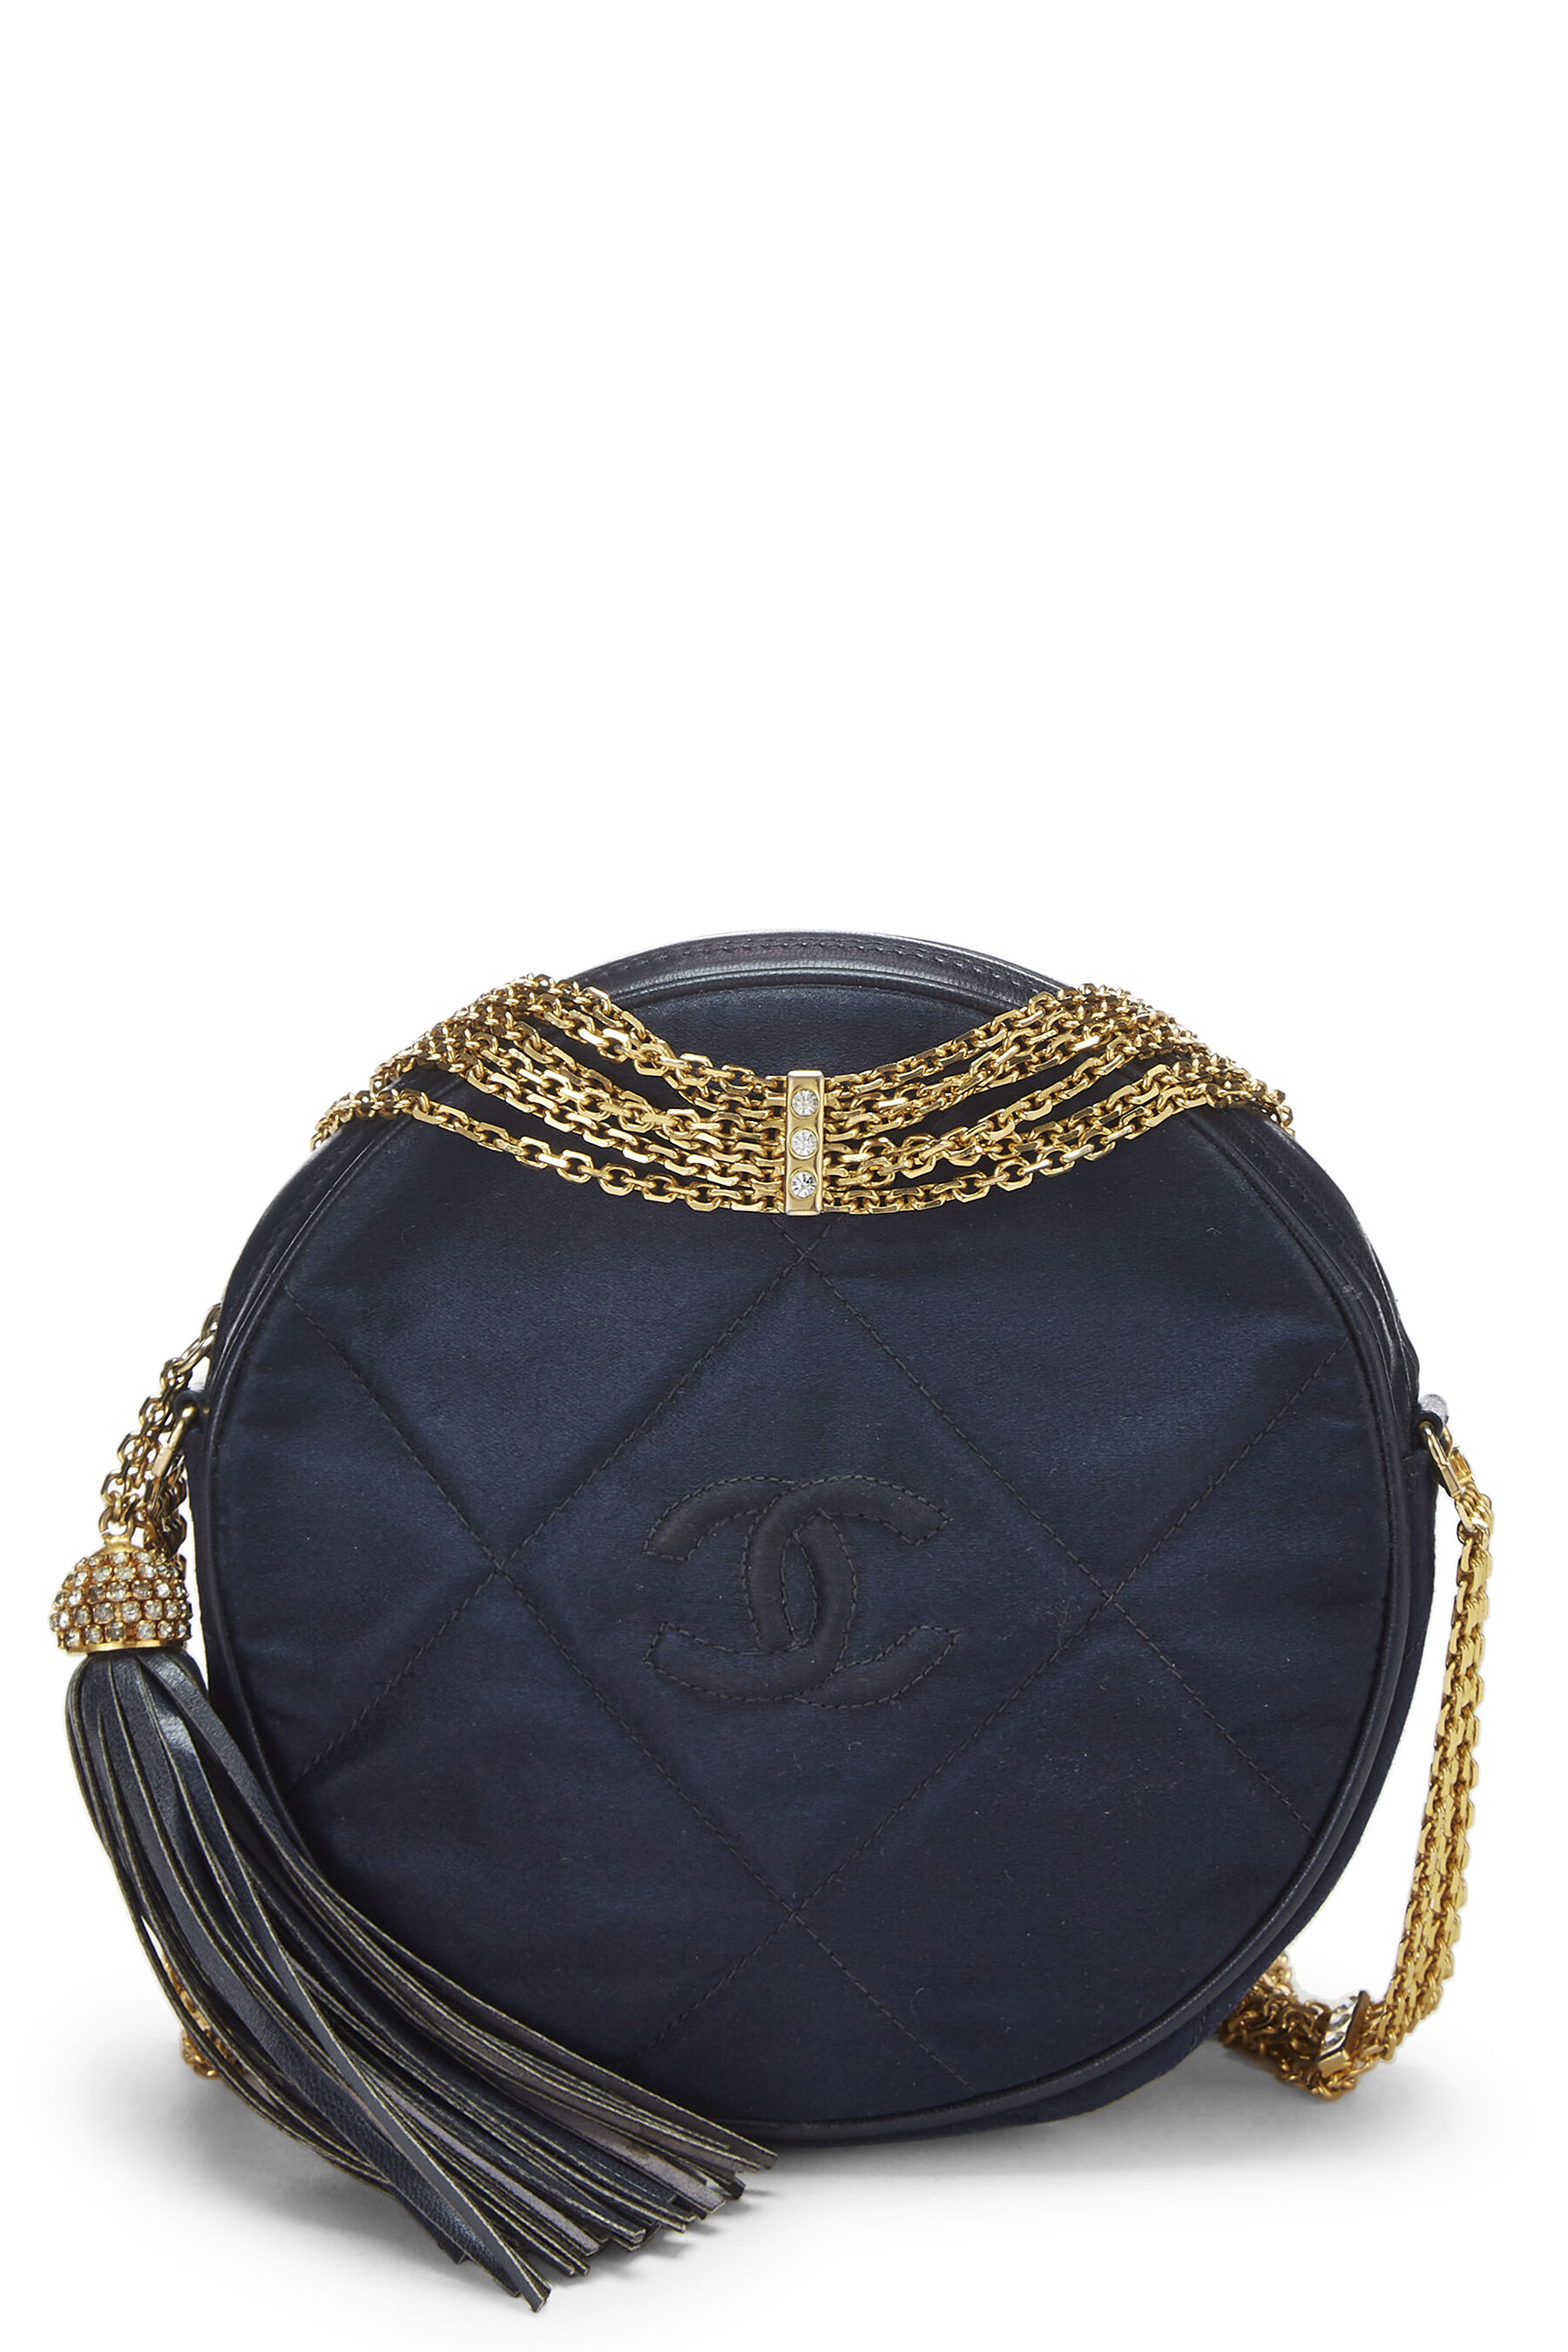 Chanel - Navy Quilted Satin CC Circle Shoulder Bag